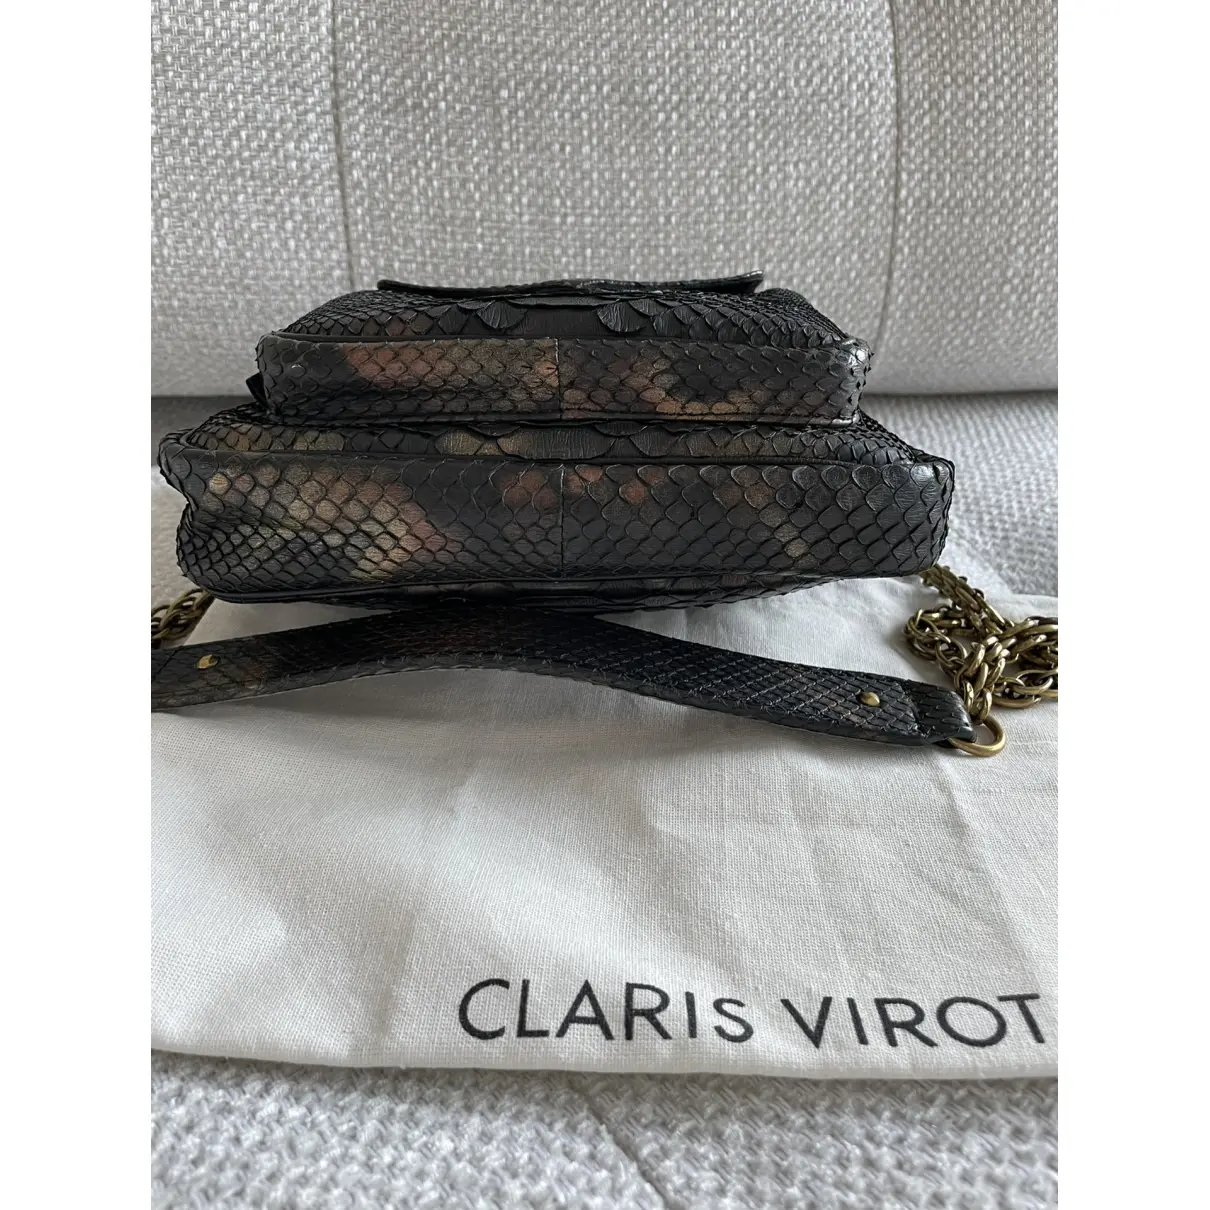 Buy Claris Virot Charly leather handbag online